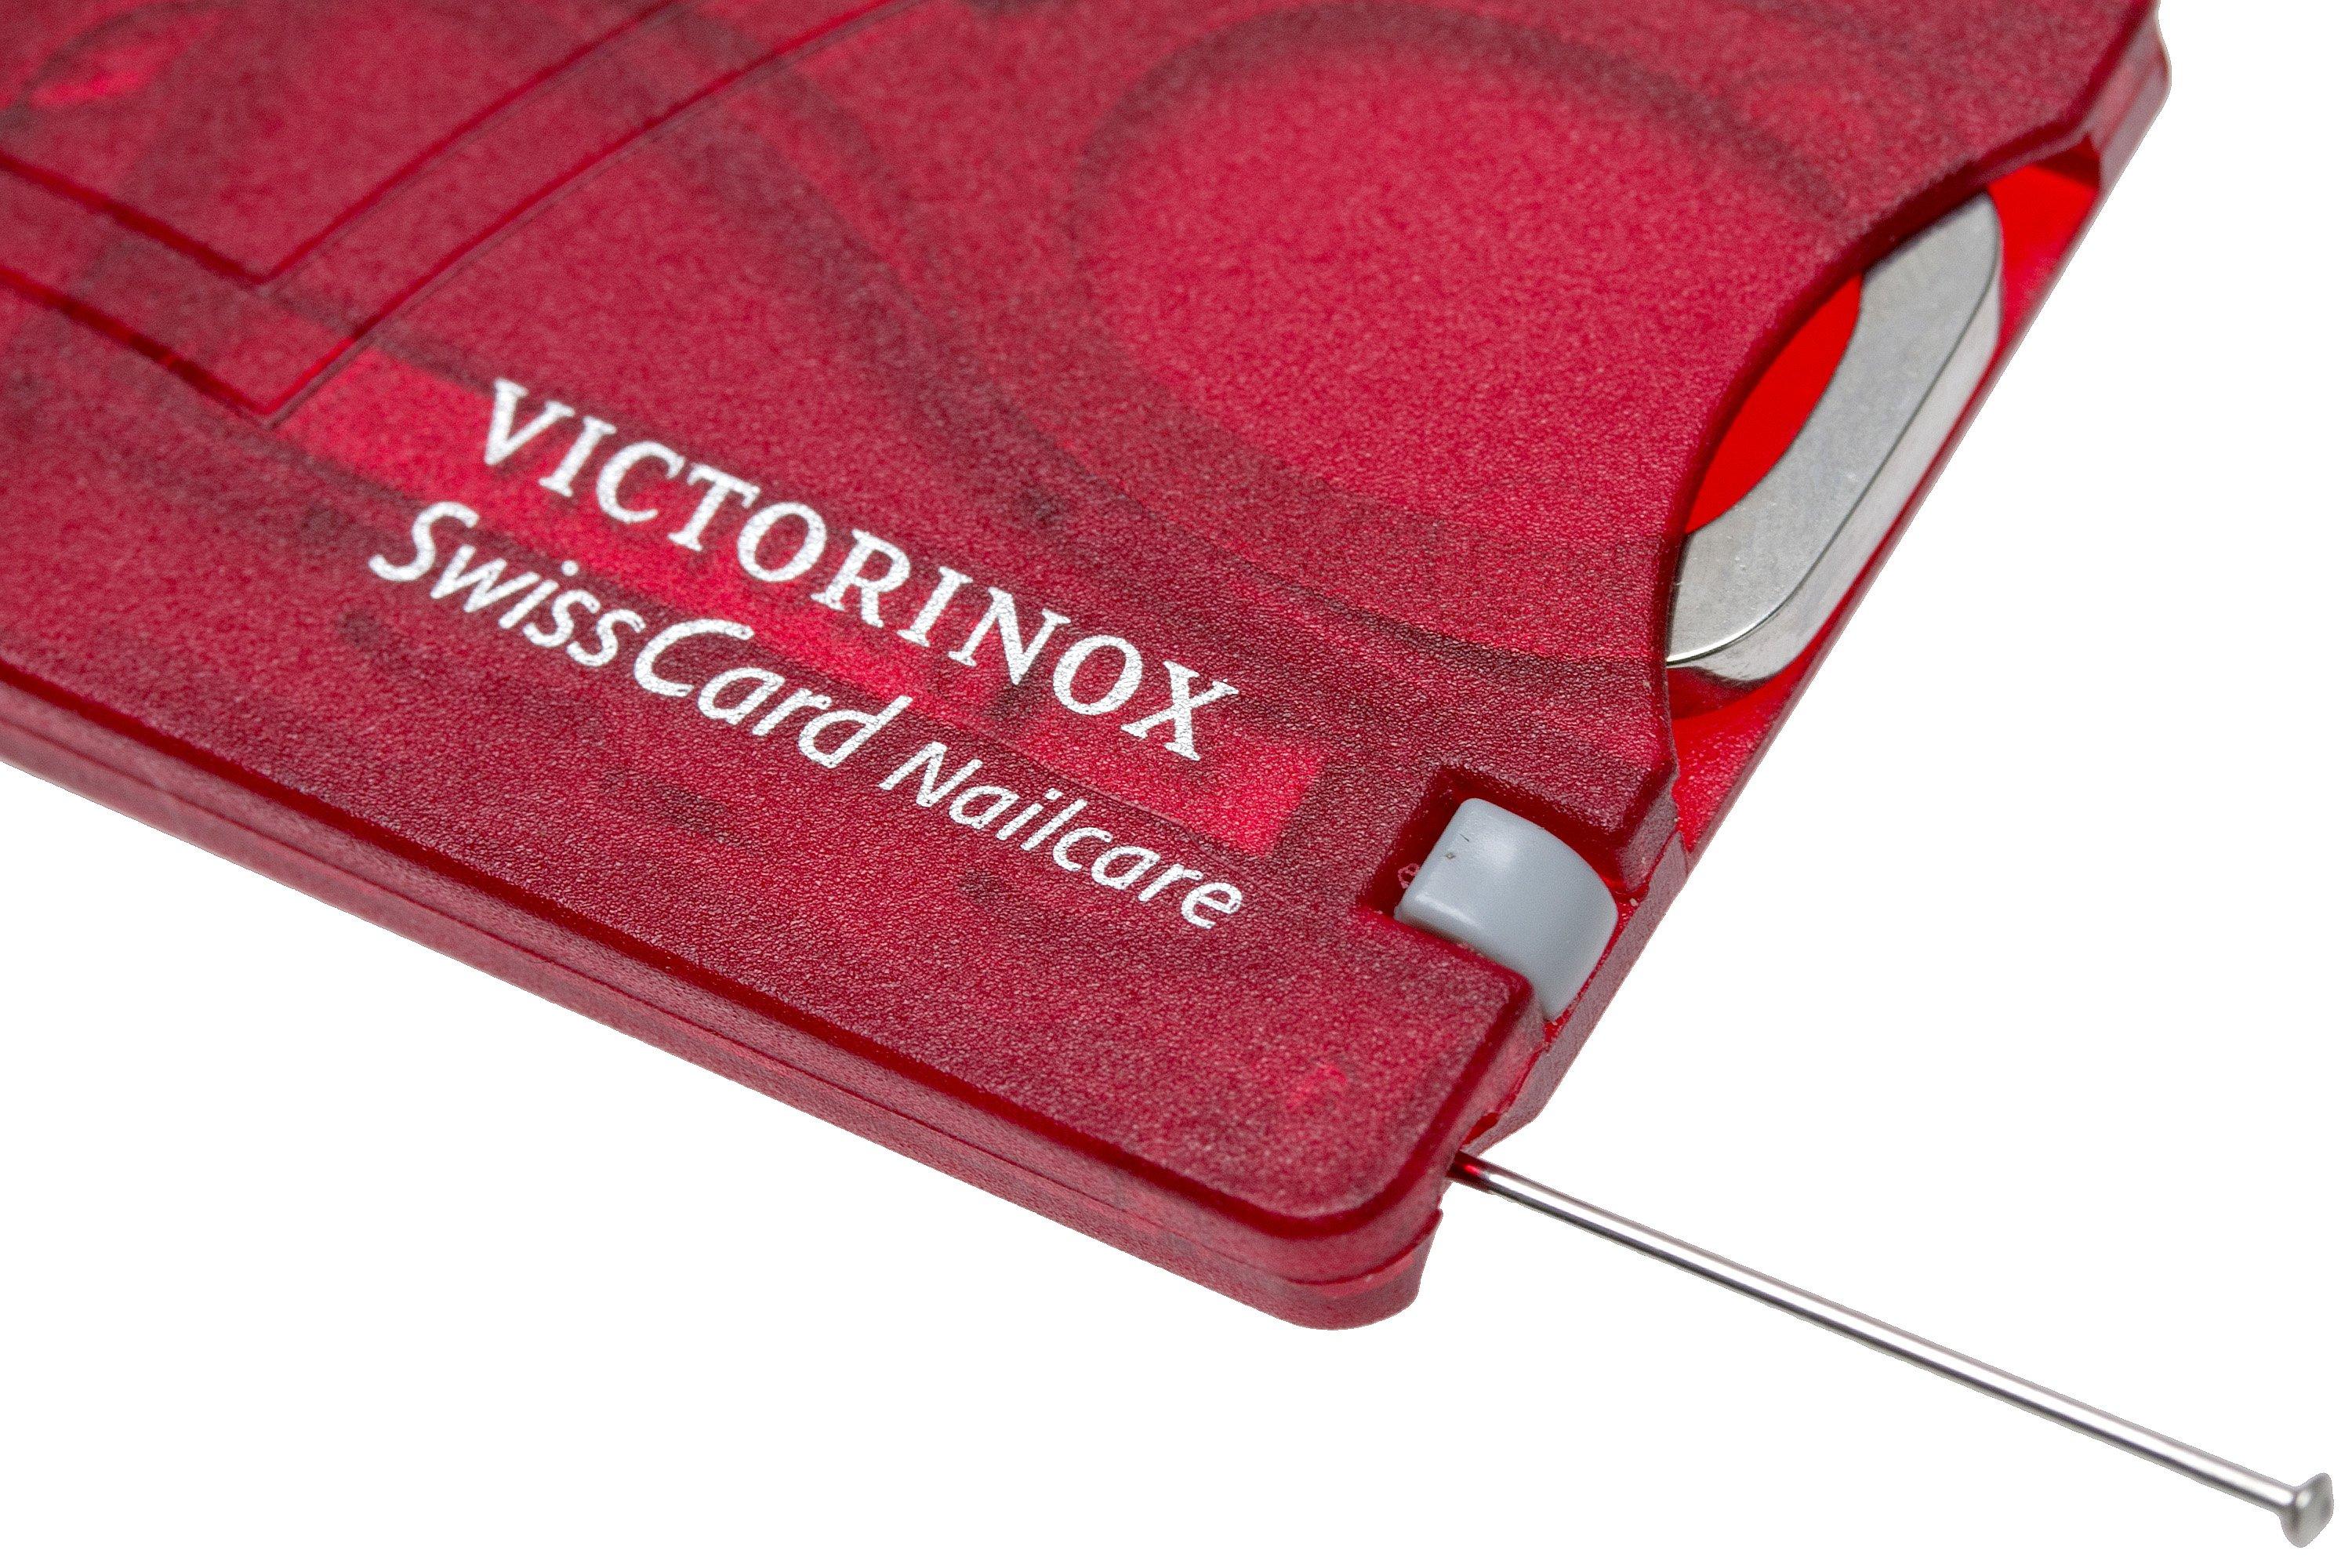 Victorinox Swiss card + nail clipper : r/EDC